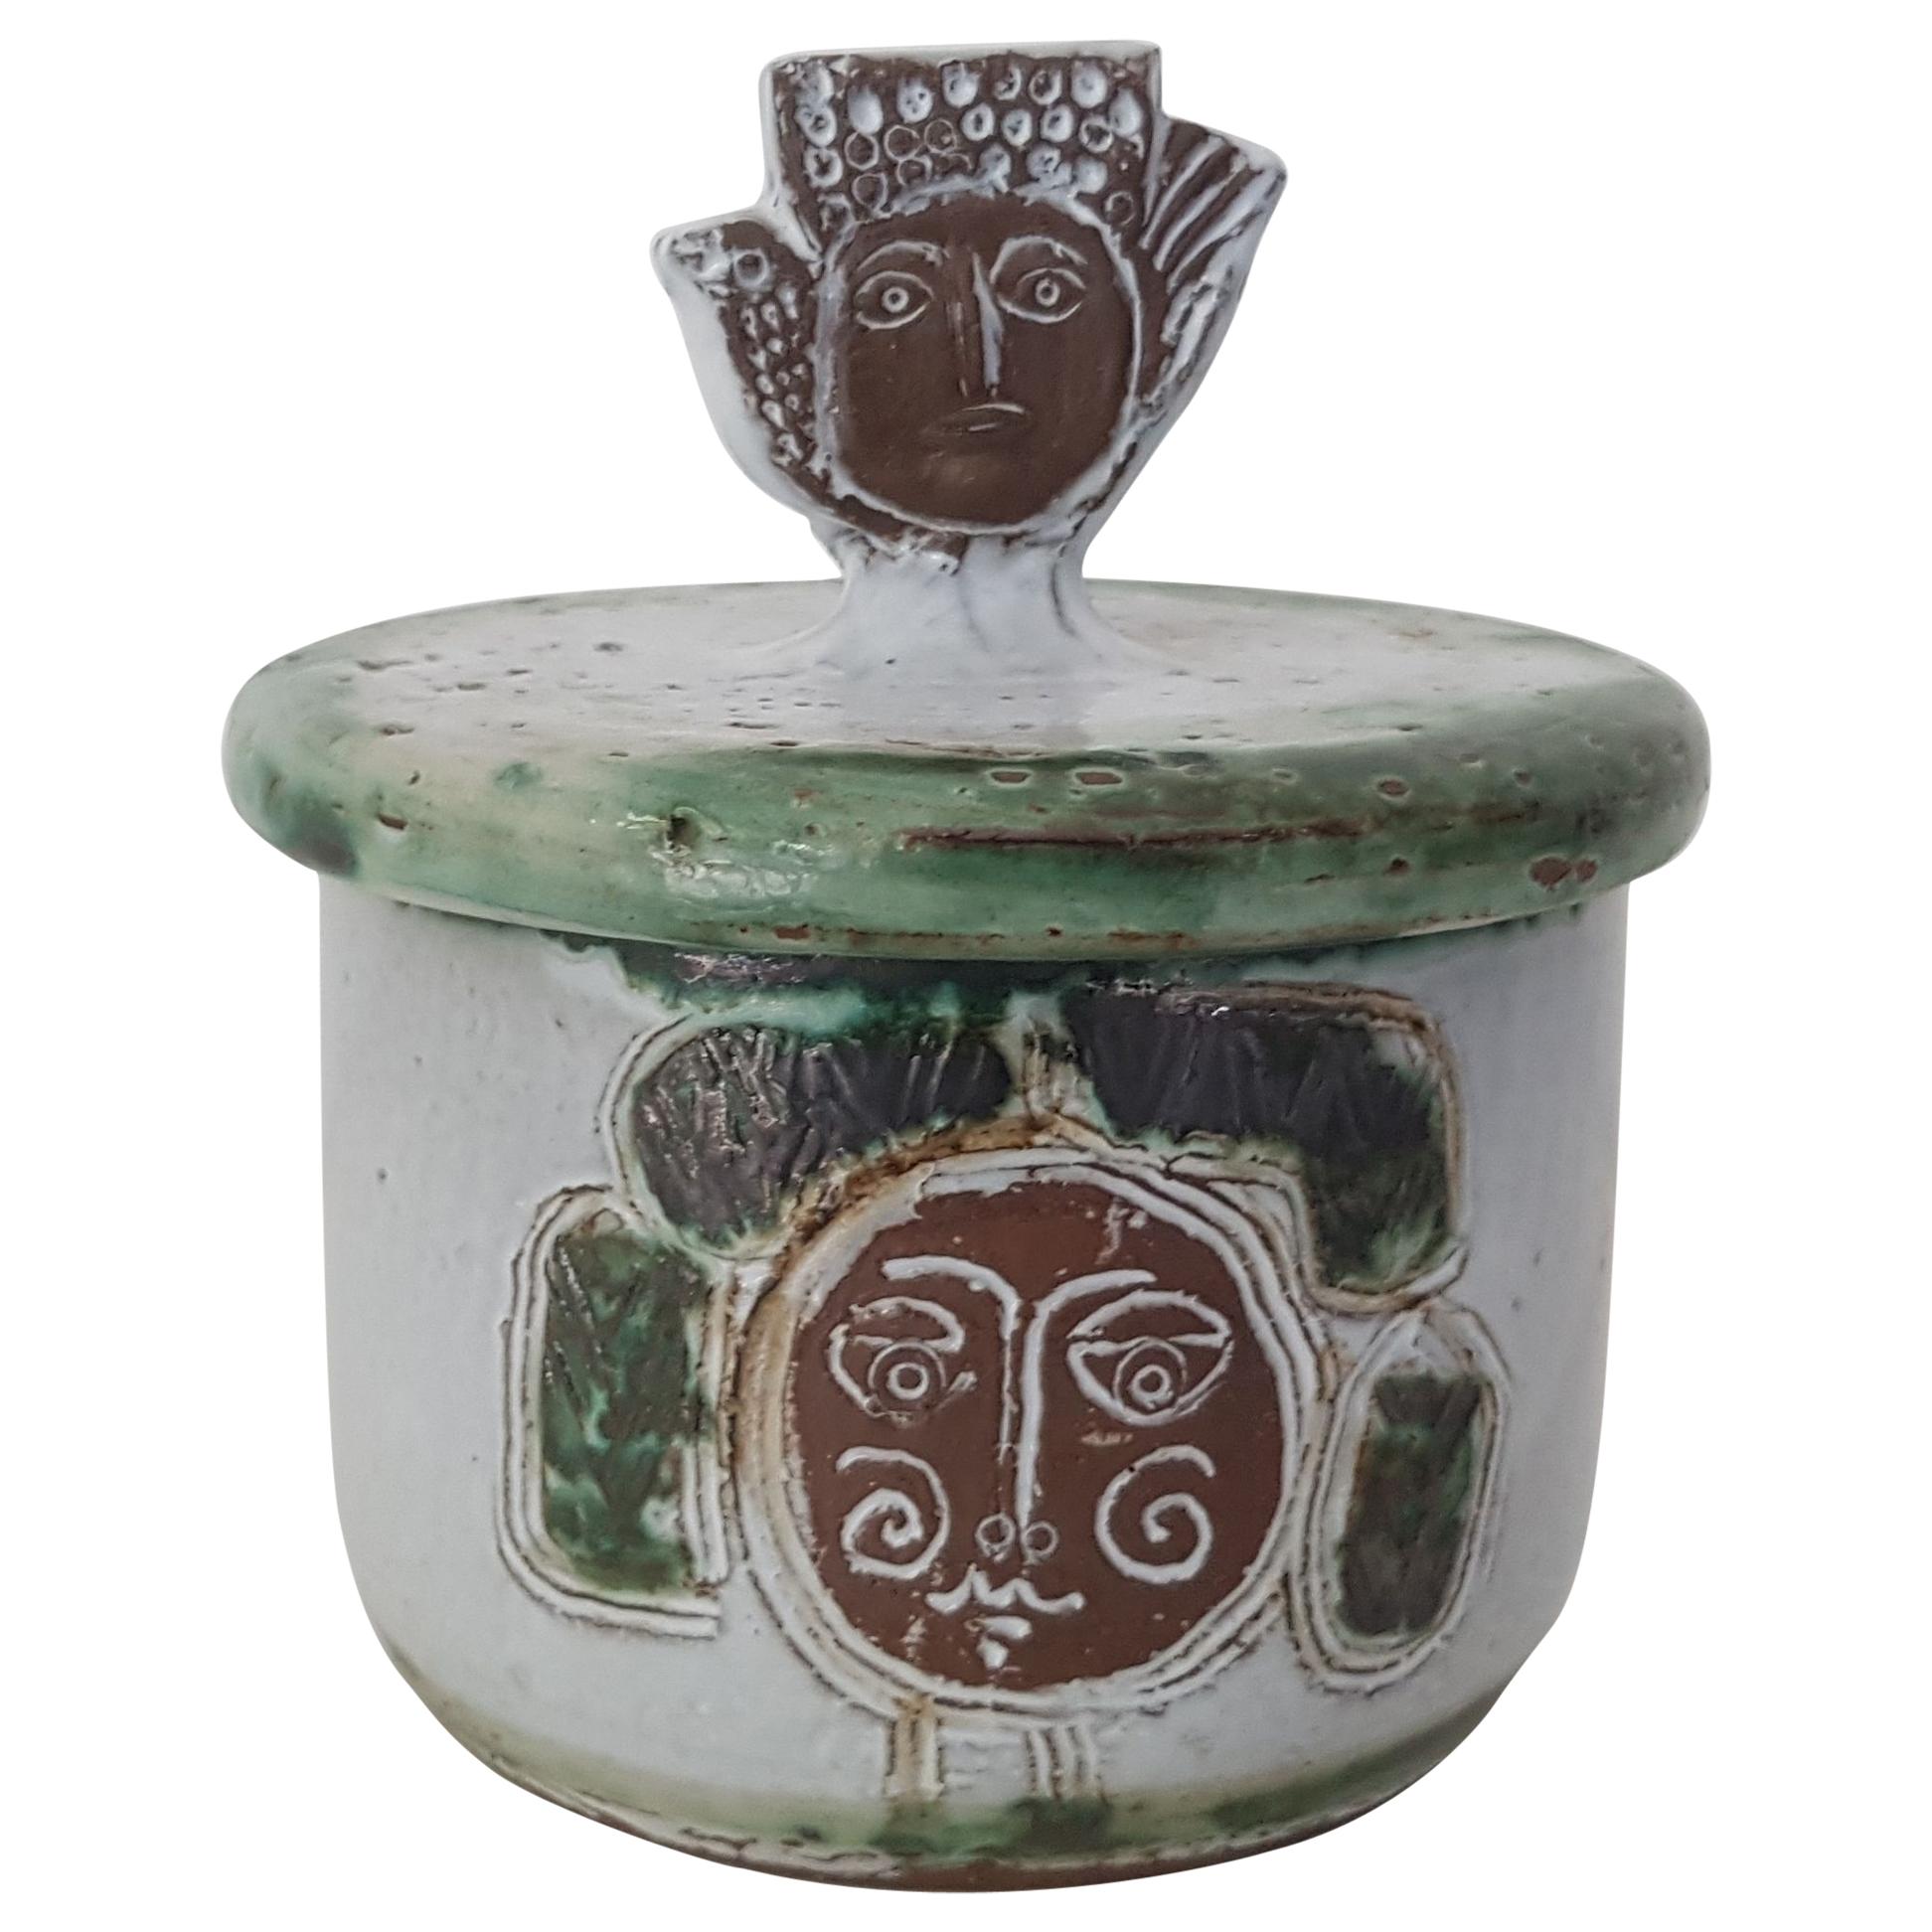 Mid Century Modern French Lidded Ceramic Pot by Albert Thiry